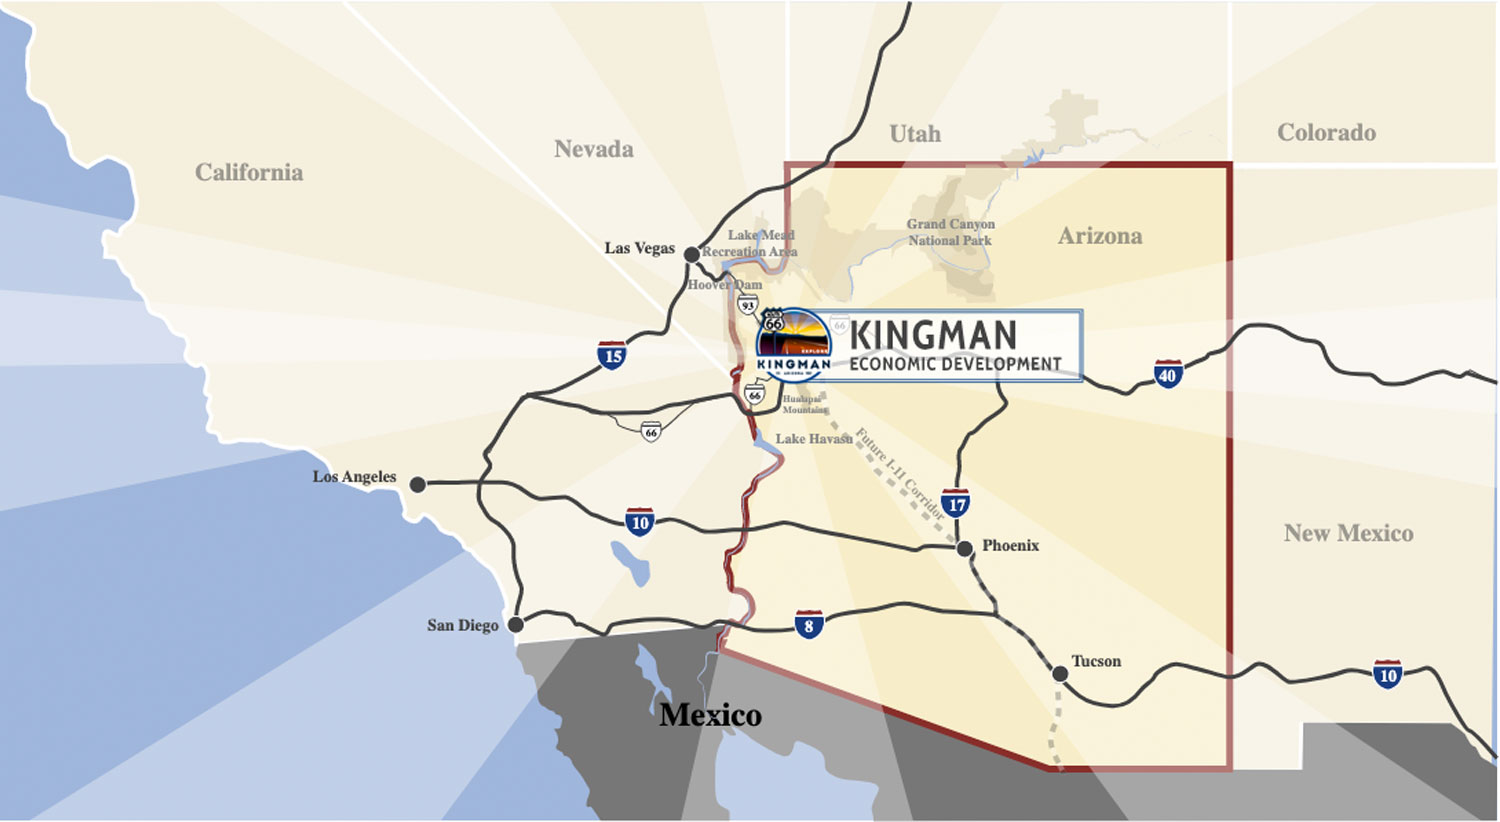 map of southwest usa with Kingman Economic development featured